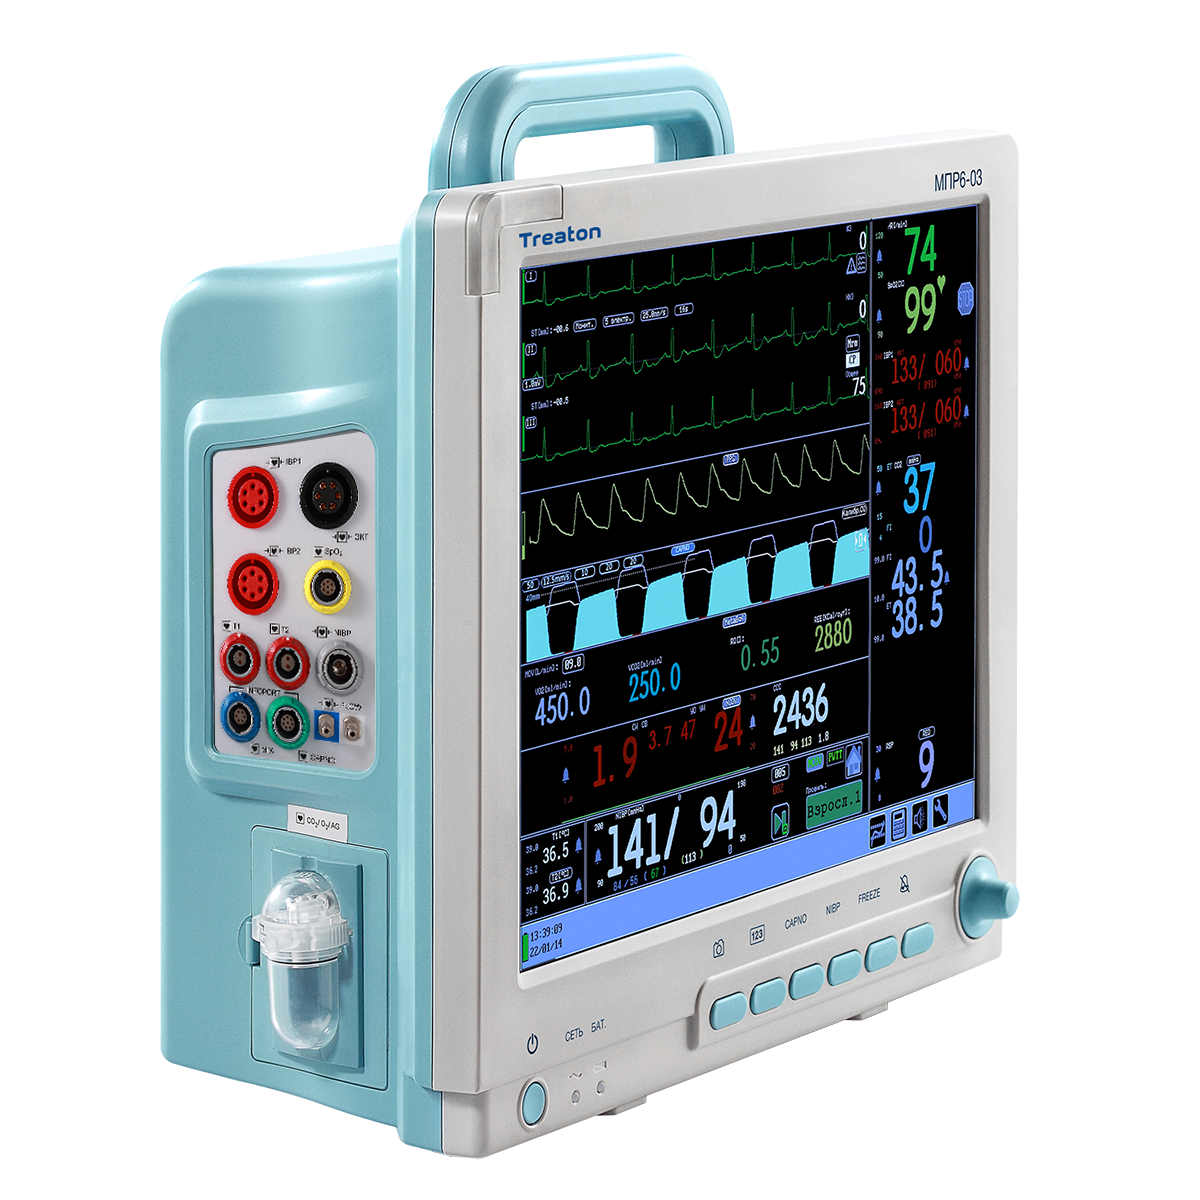 Реанимационный монитор пациента МПР6-03 комплектация Р5.22